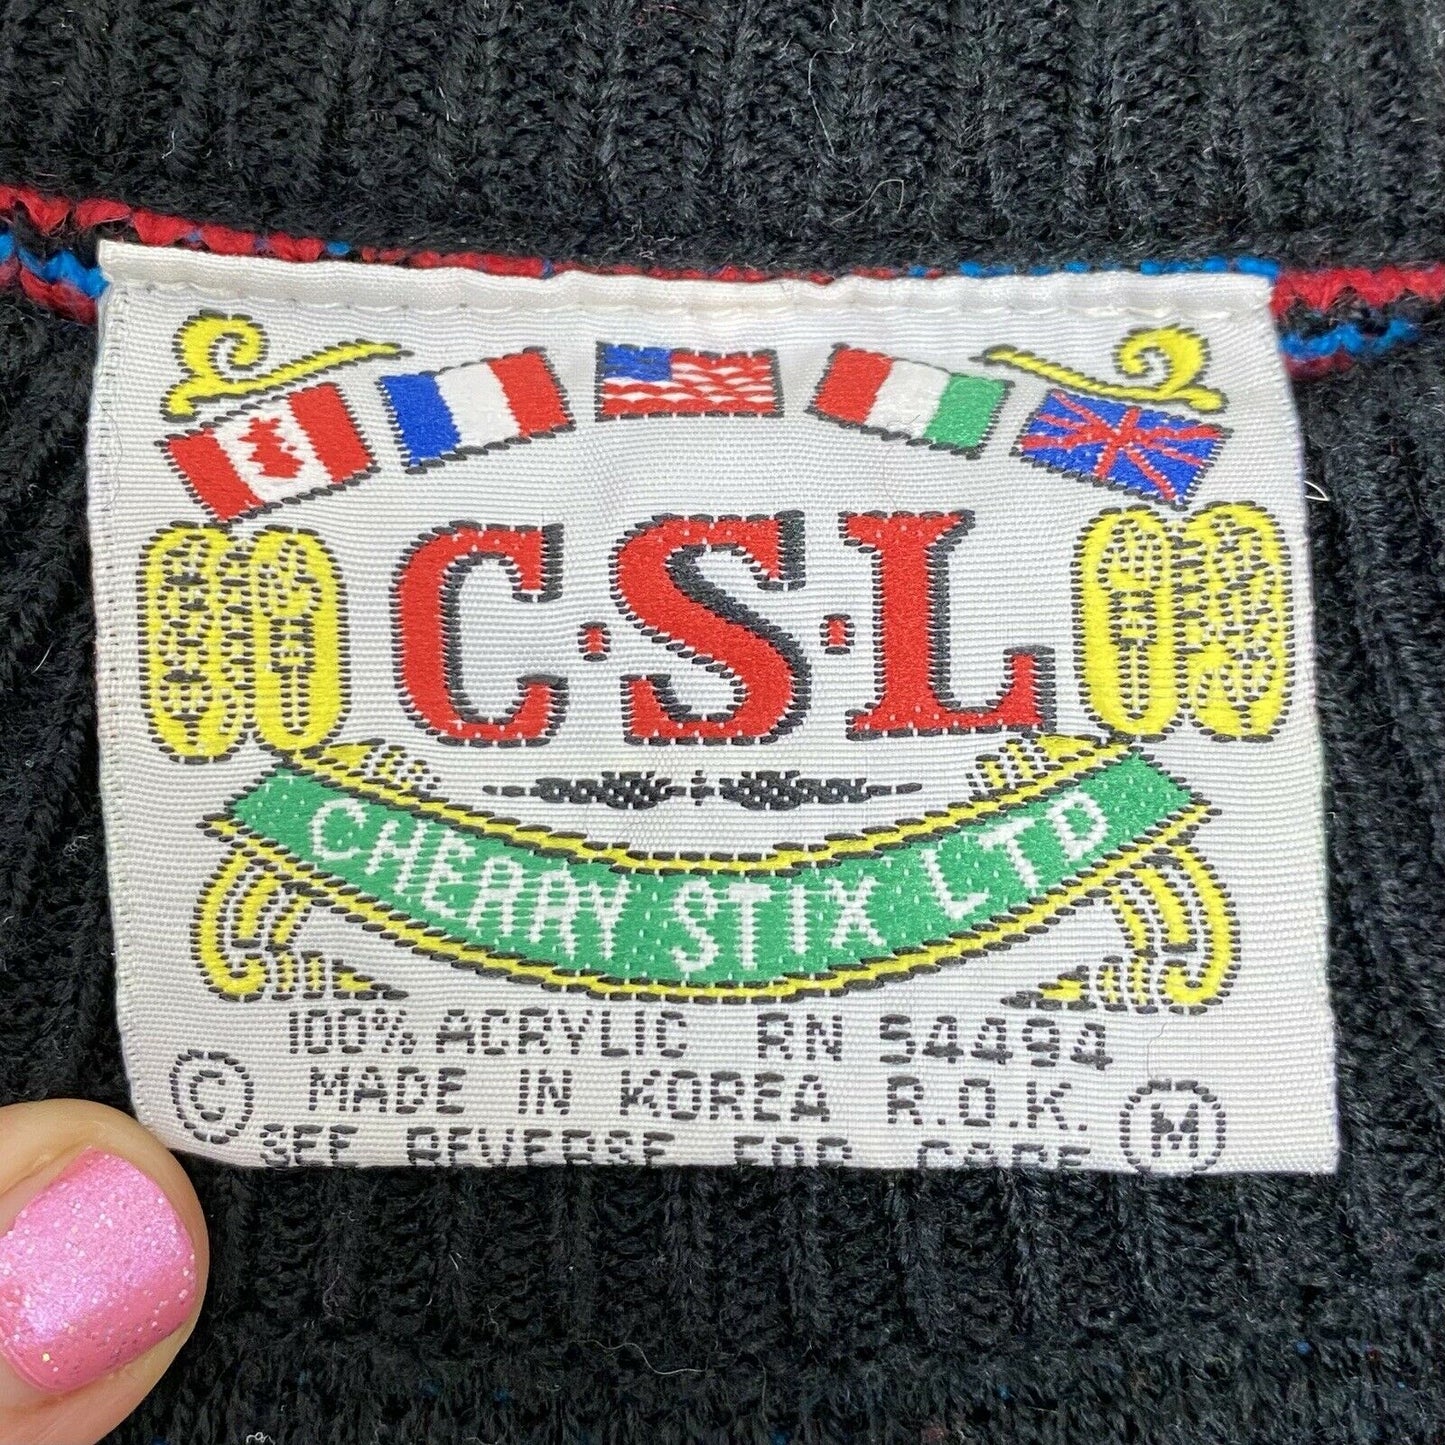 1980s Ice Skater Slouchy Sweater, Cherry Stix Ltd Size Medium